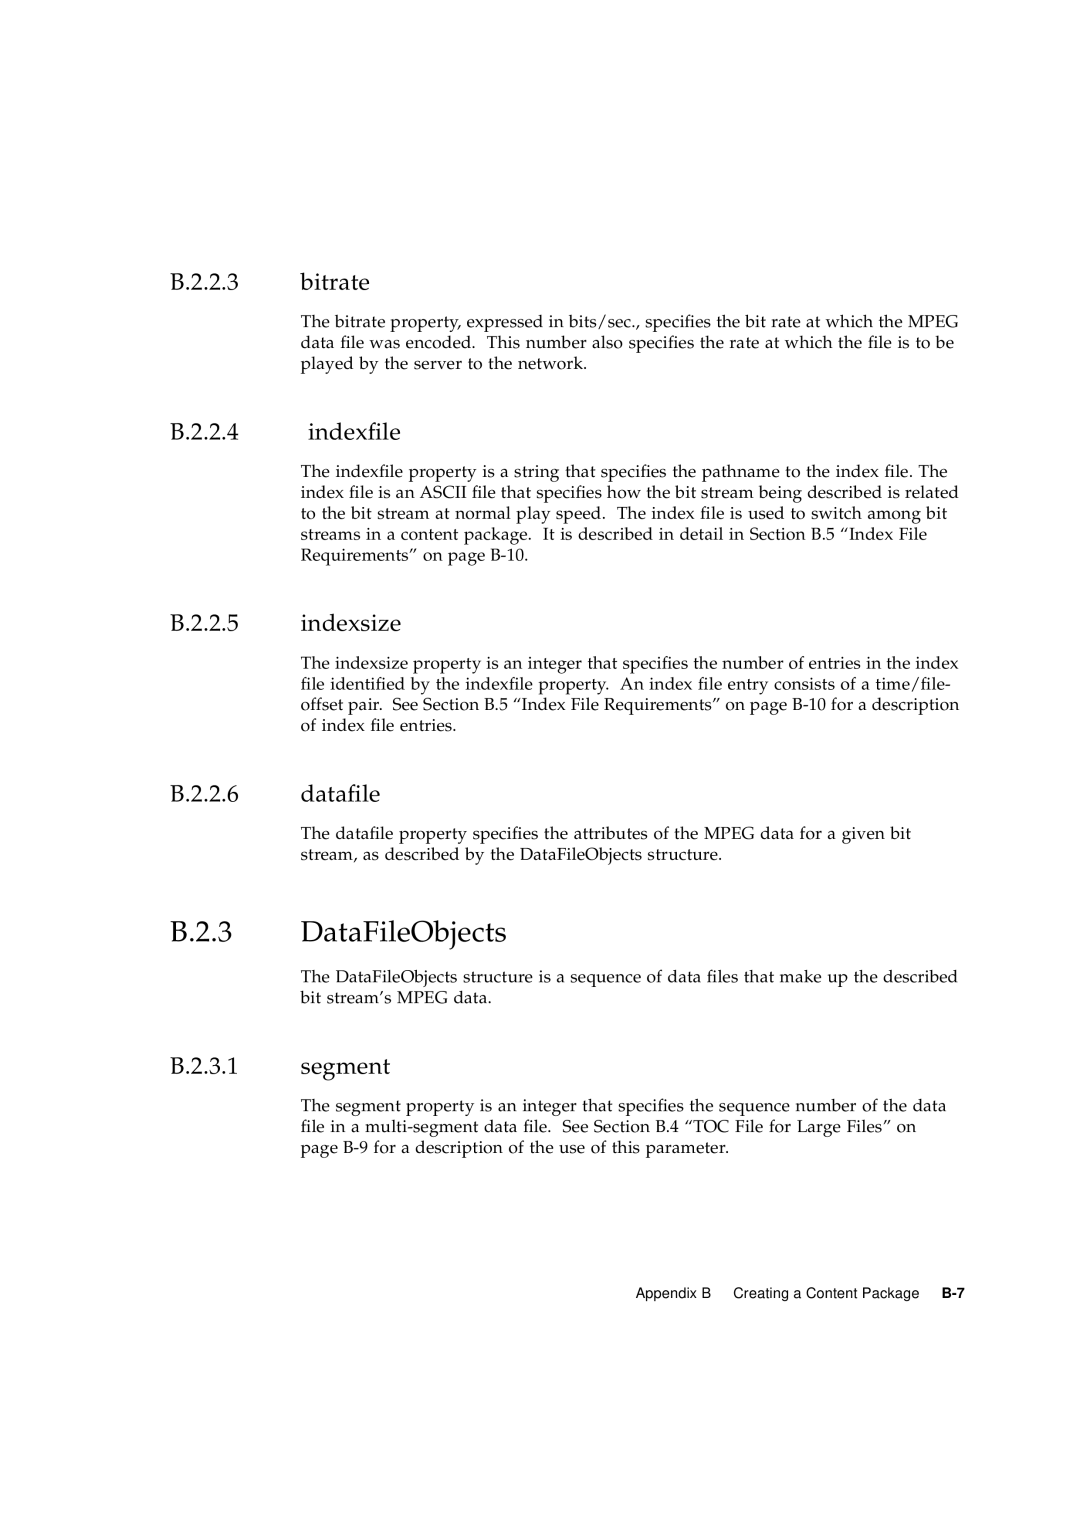 Sun Microsystems 2.1 manual B.2.3 DataFileObjects, B.2.2.3 bitrate, B.2.2.4 indexﬁle, B.2.2.5 indexsize, B.2.2.6 dataﬁle 